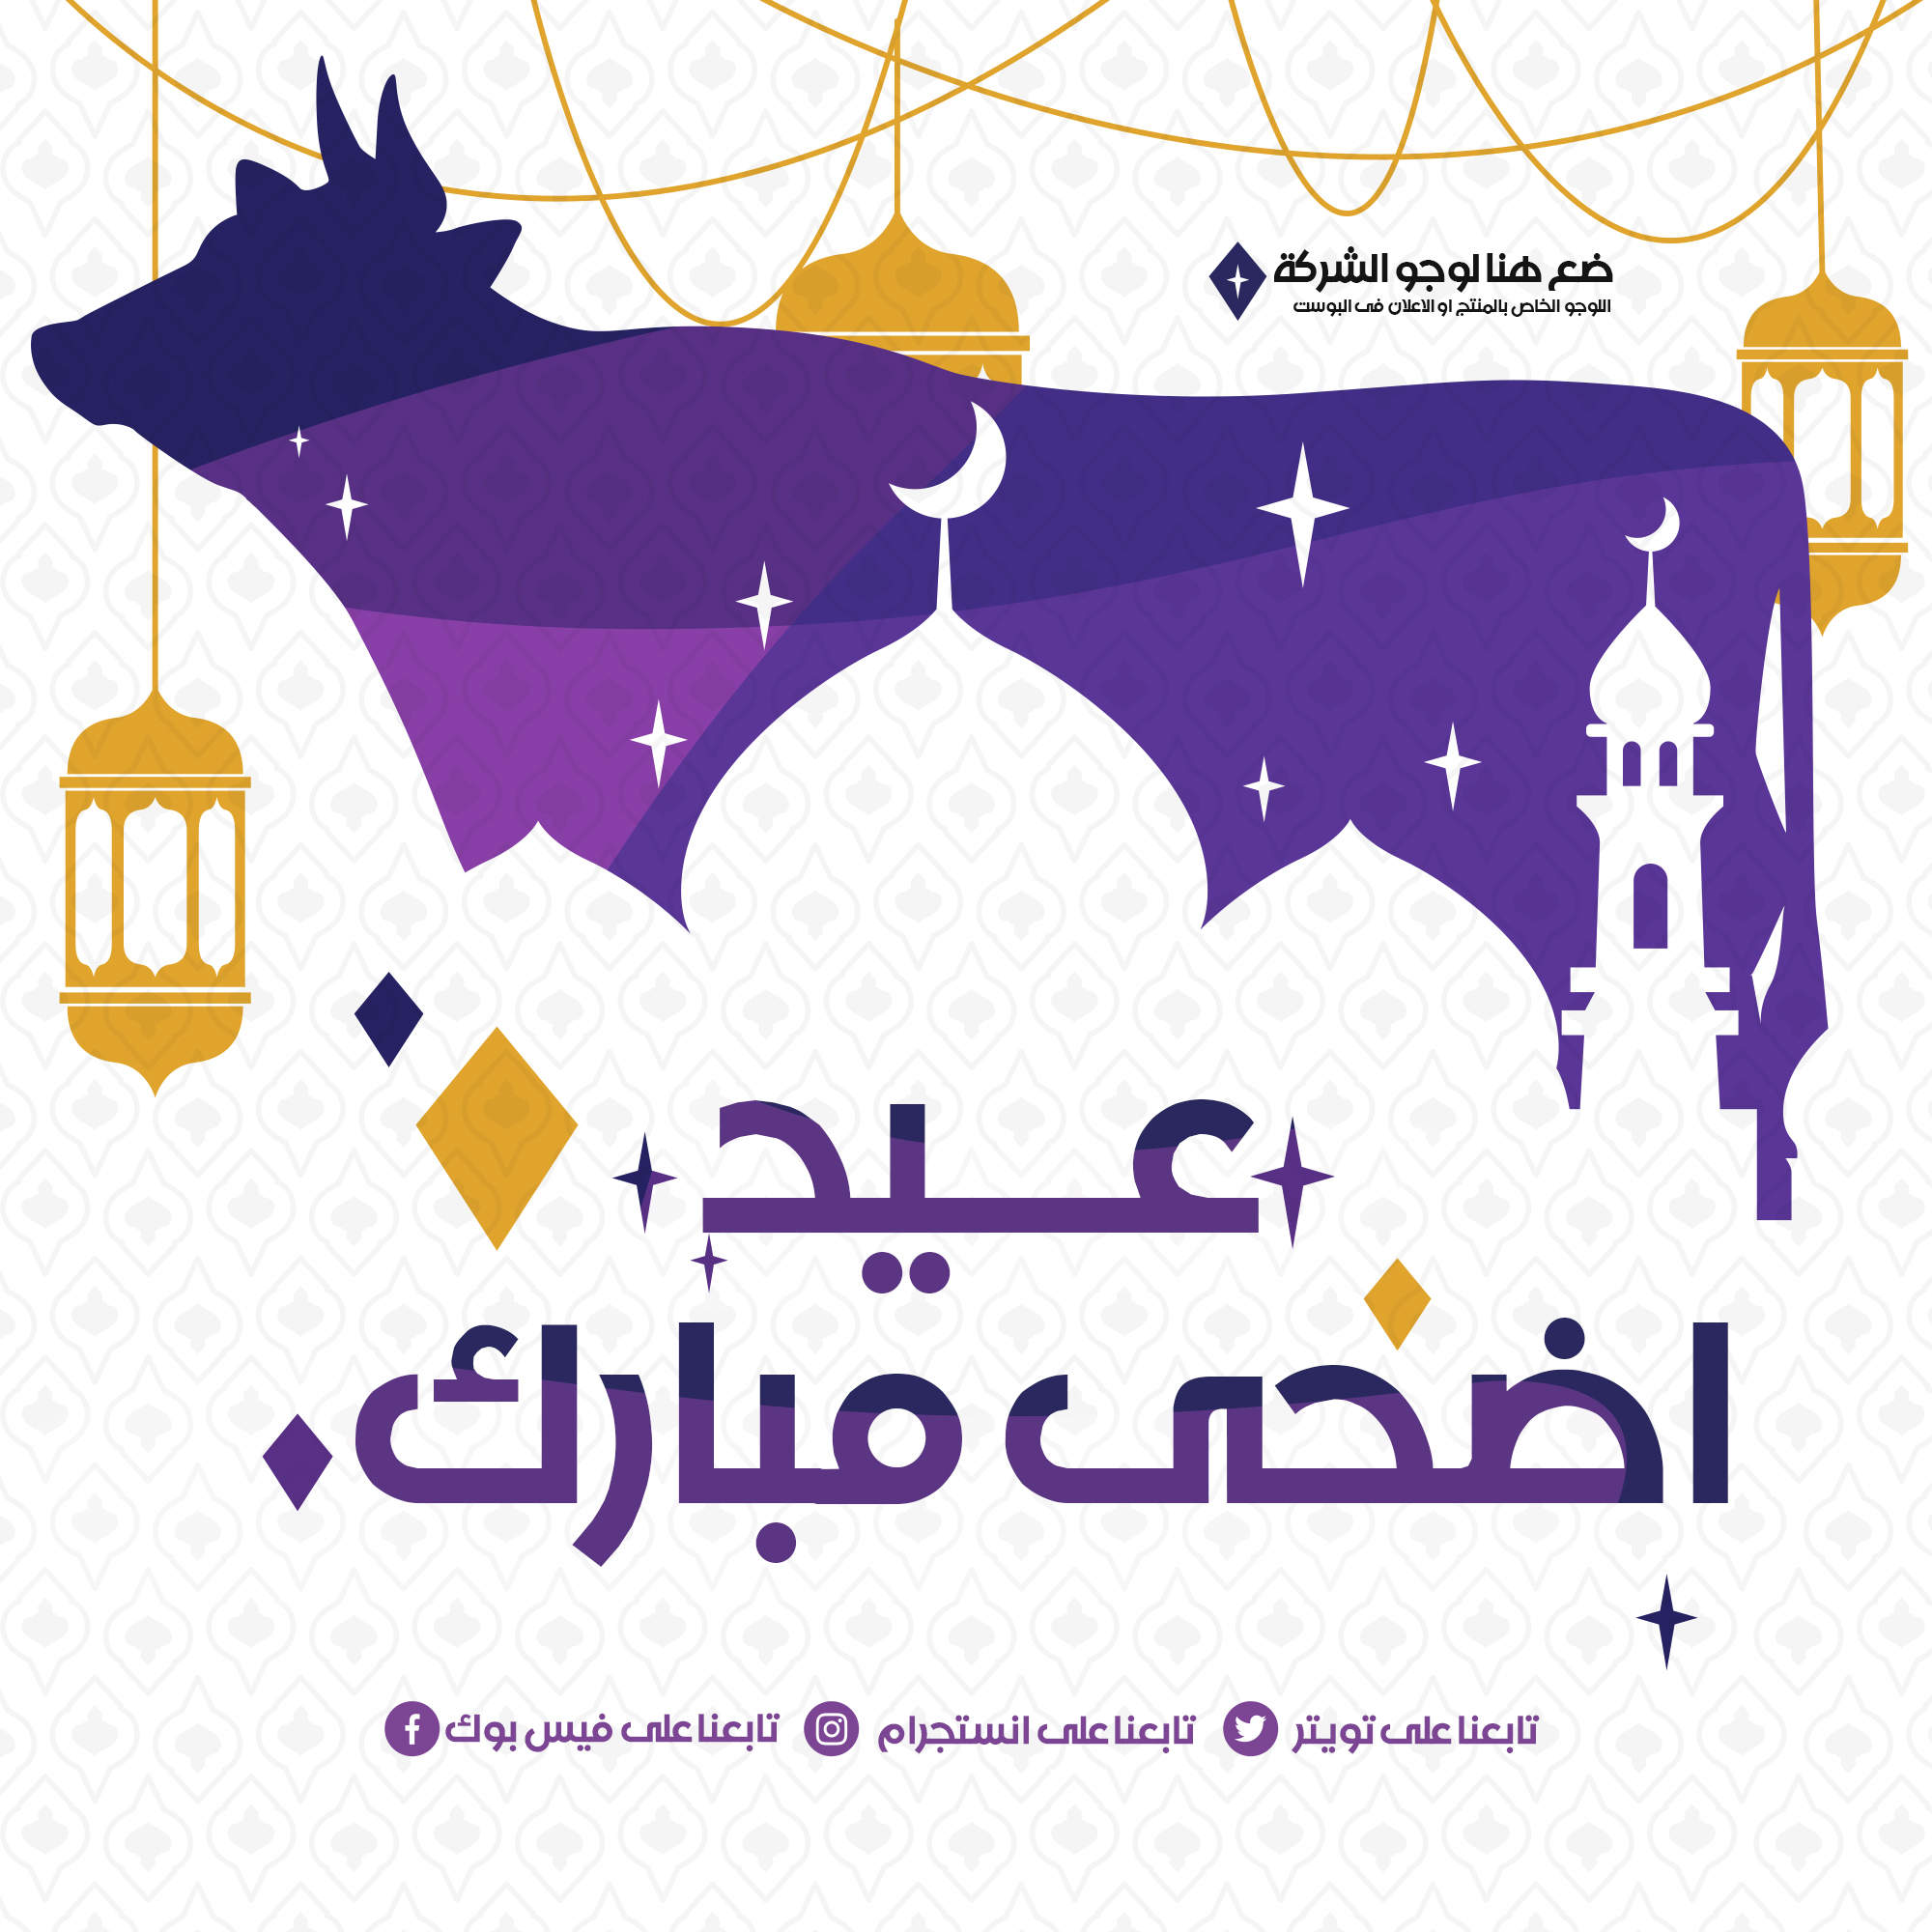 Download social media designs for Eid Al-Adha and Eid congratulations